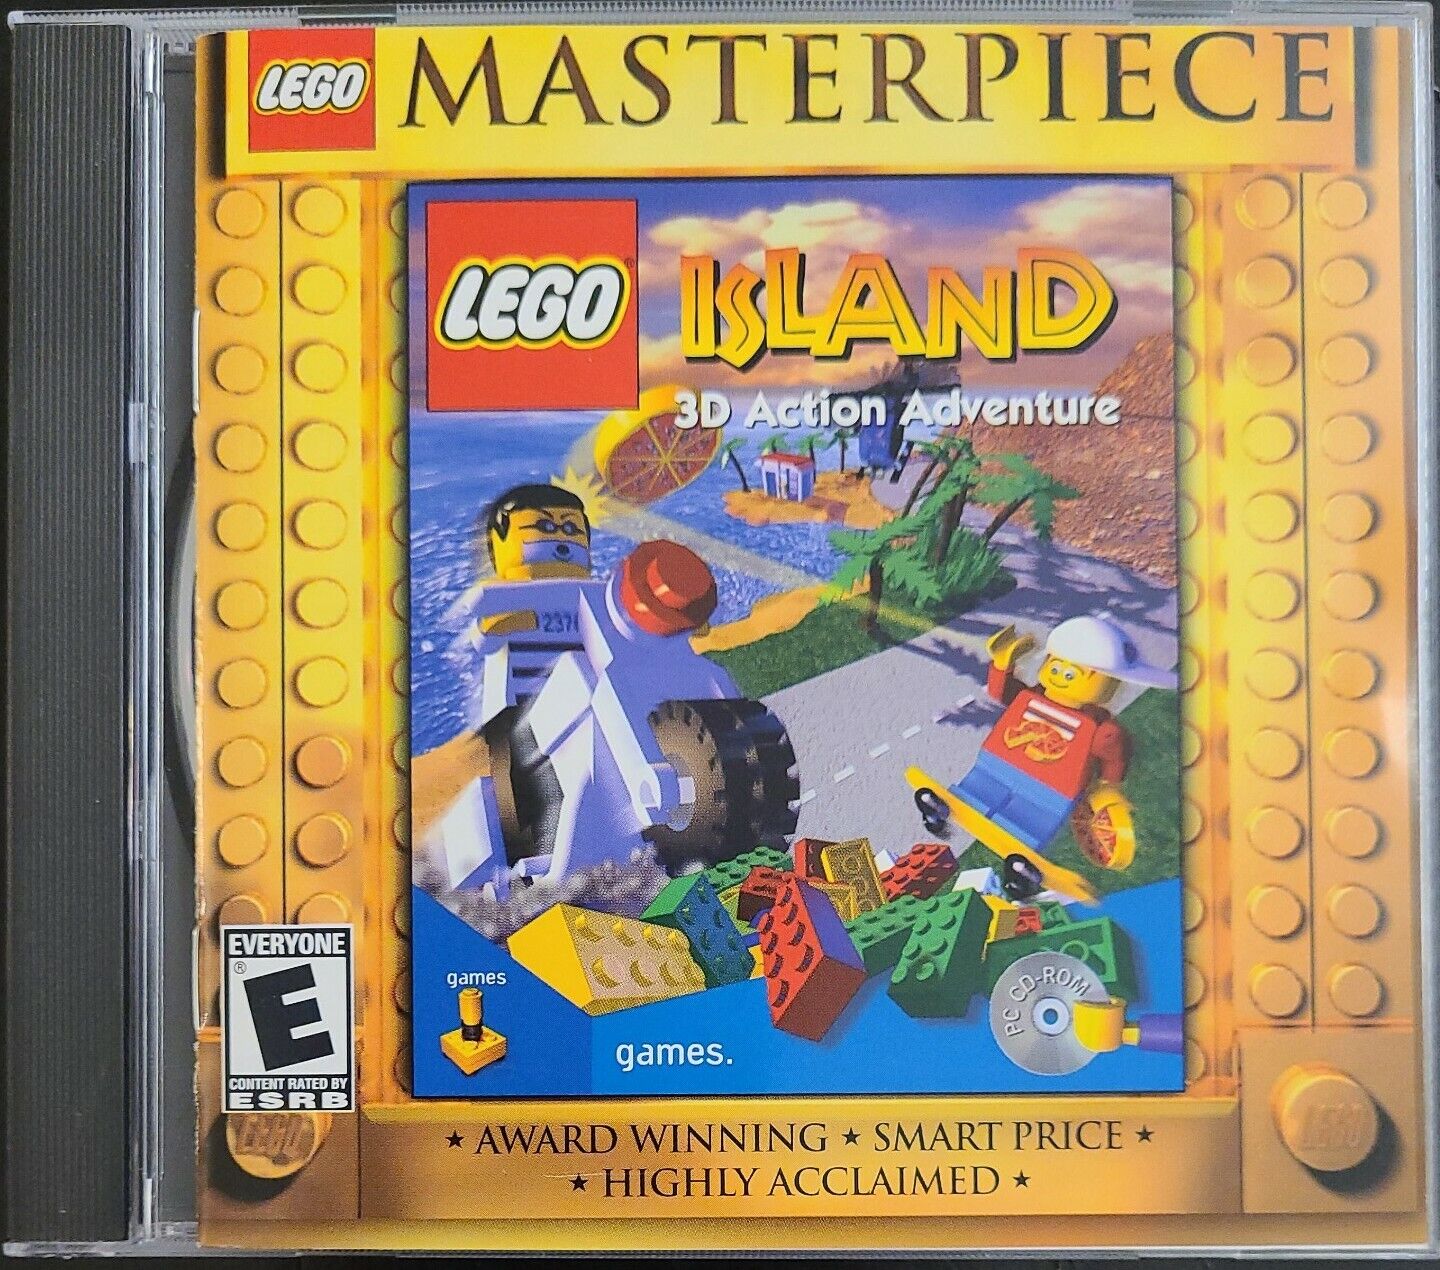 Grundlæggende teori Loaded anden Lego Masterpiece: Lego Island 3D Action Adventure CD-rom (1997 Electronic  Arts) | eBay